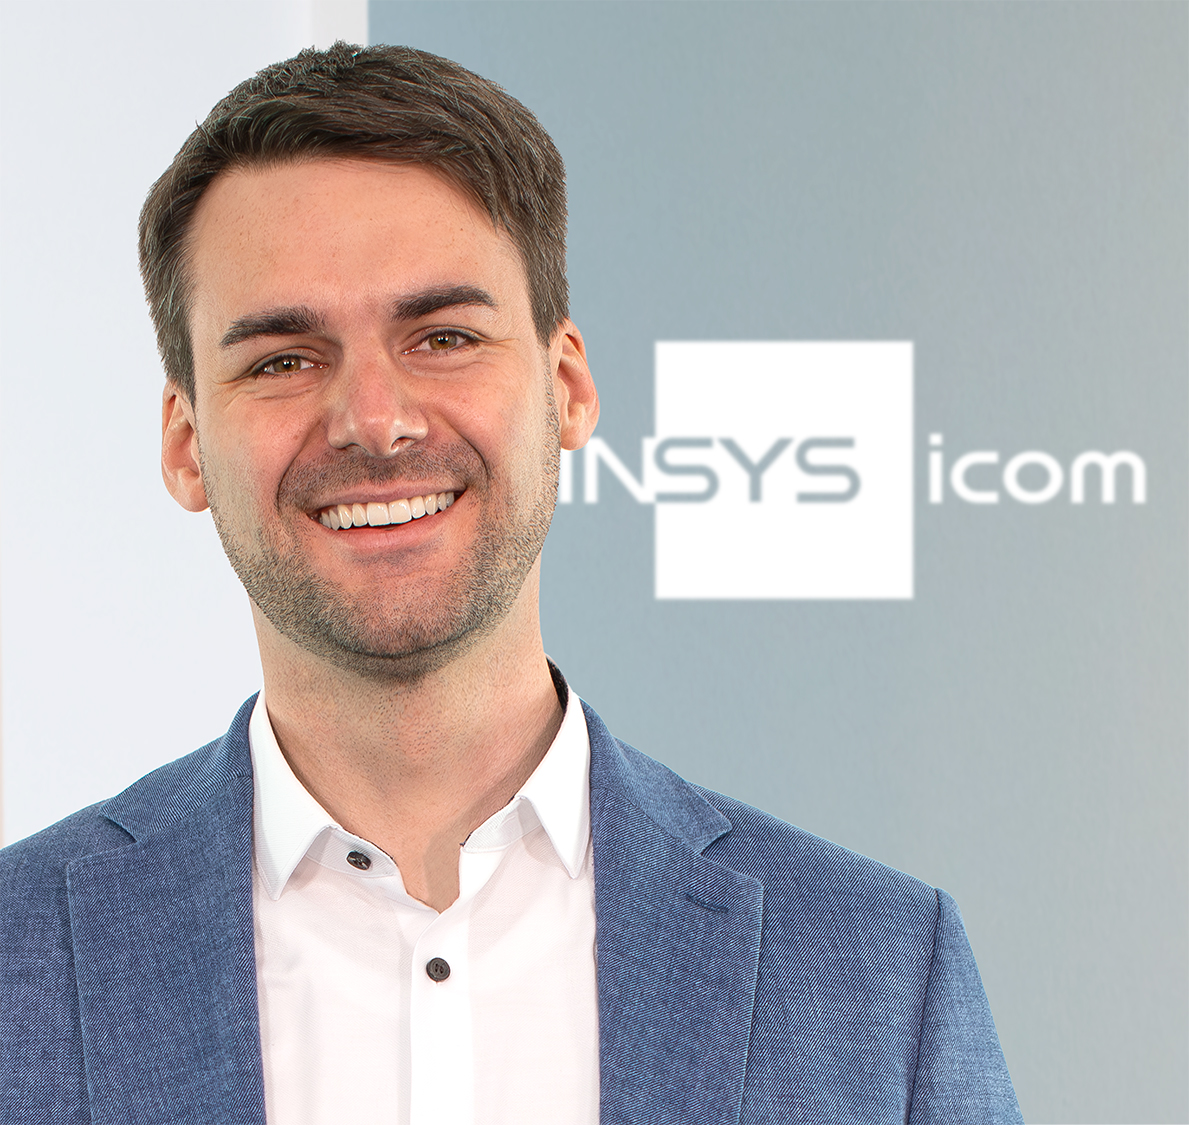 Neue Geschäftsführung bei Insys Icom